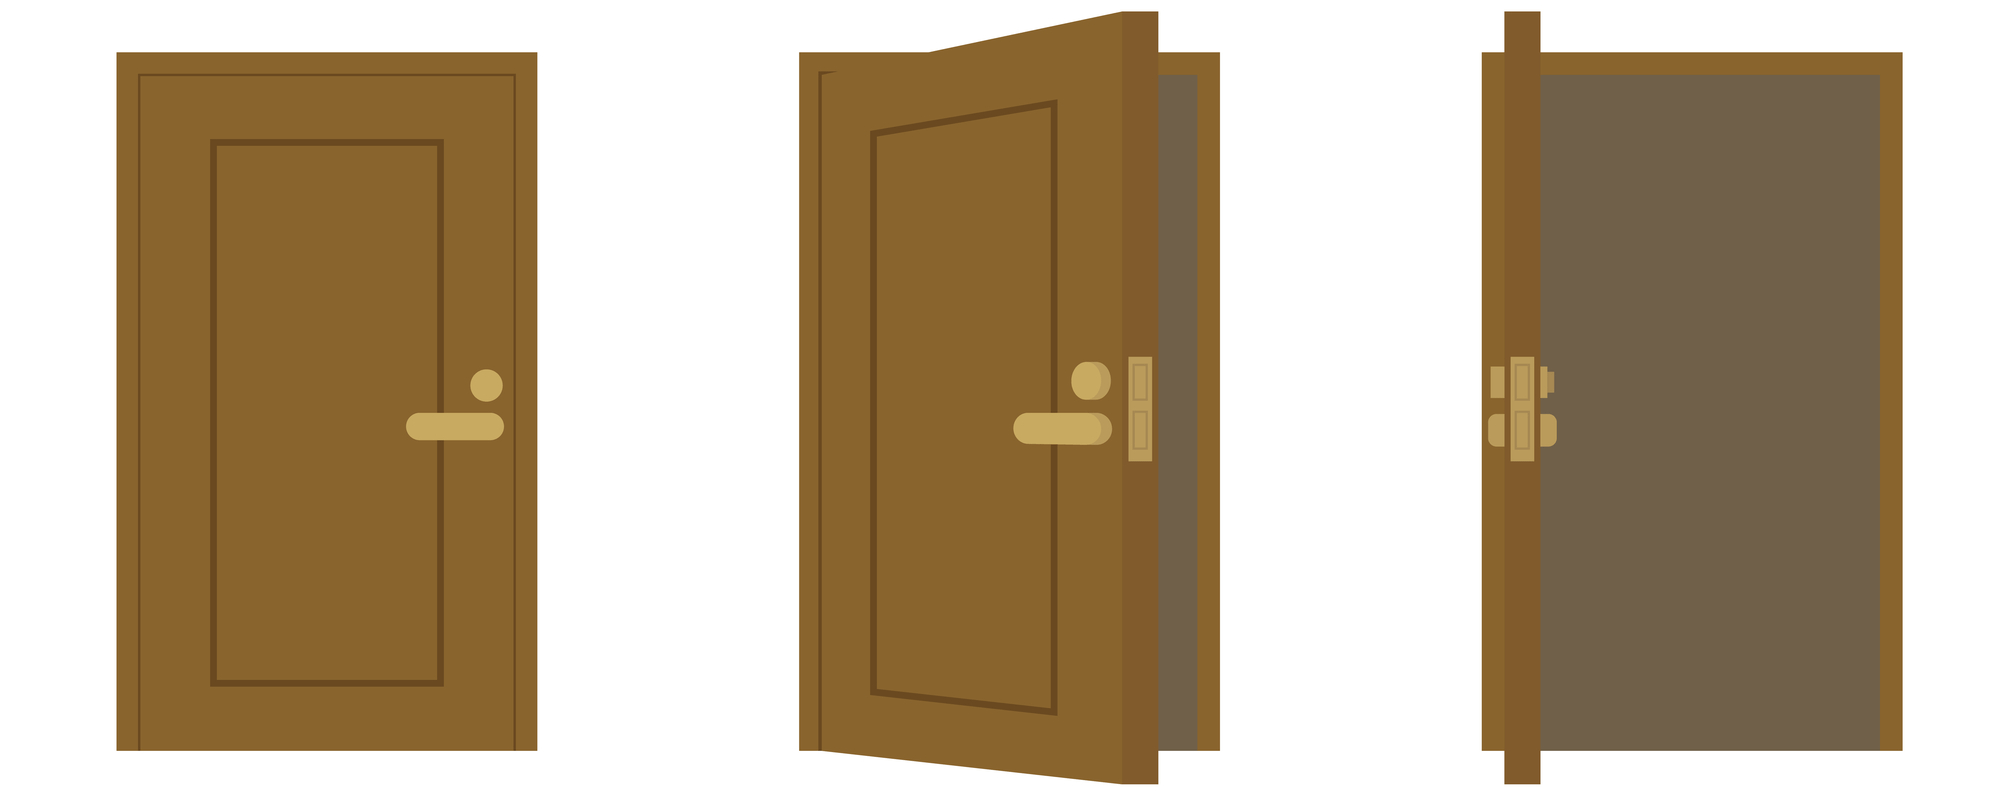 玄関ドア交換の種類別補助額